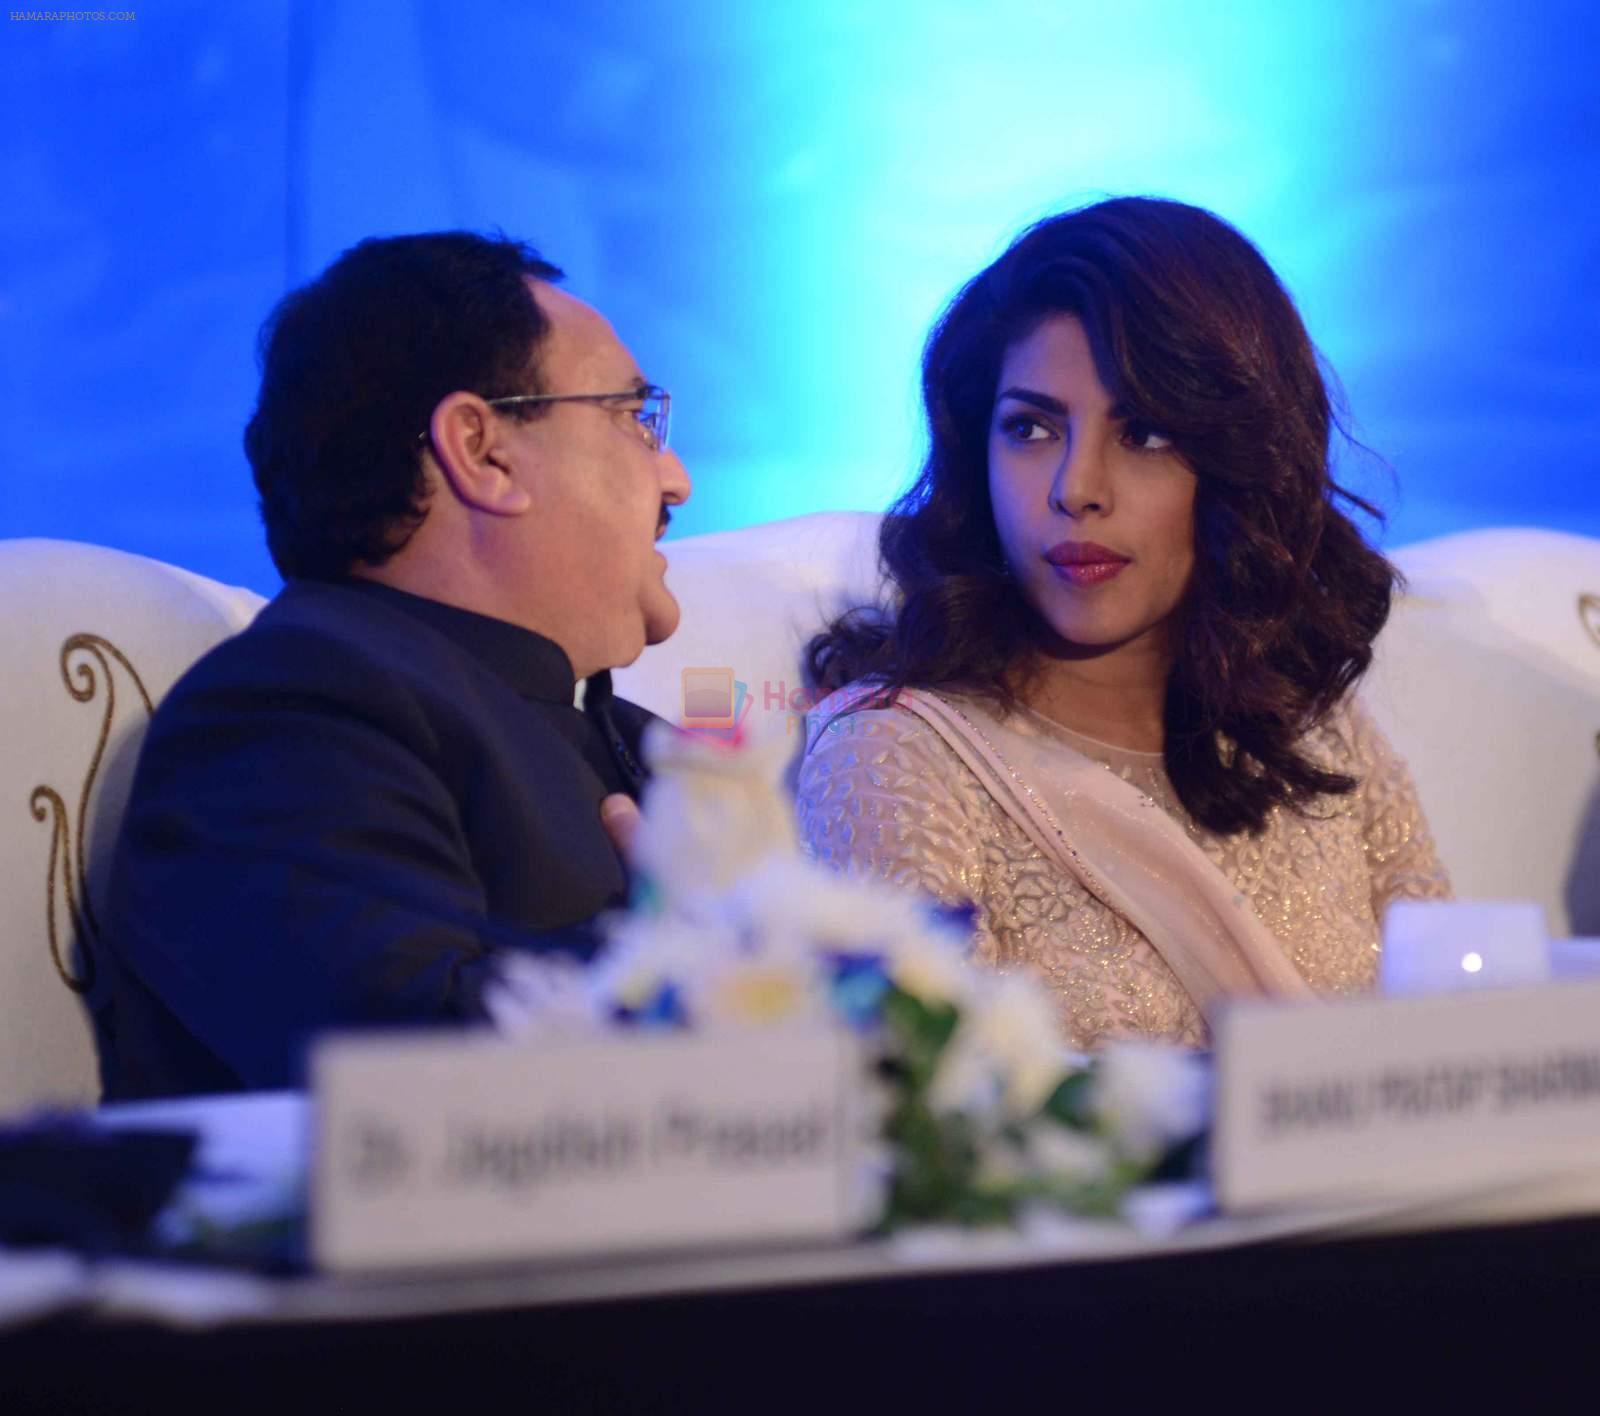 Priyanka Chopra at Unicef program on 23rd Dec 2015